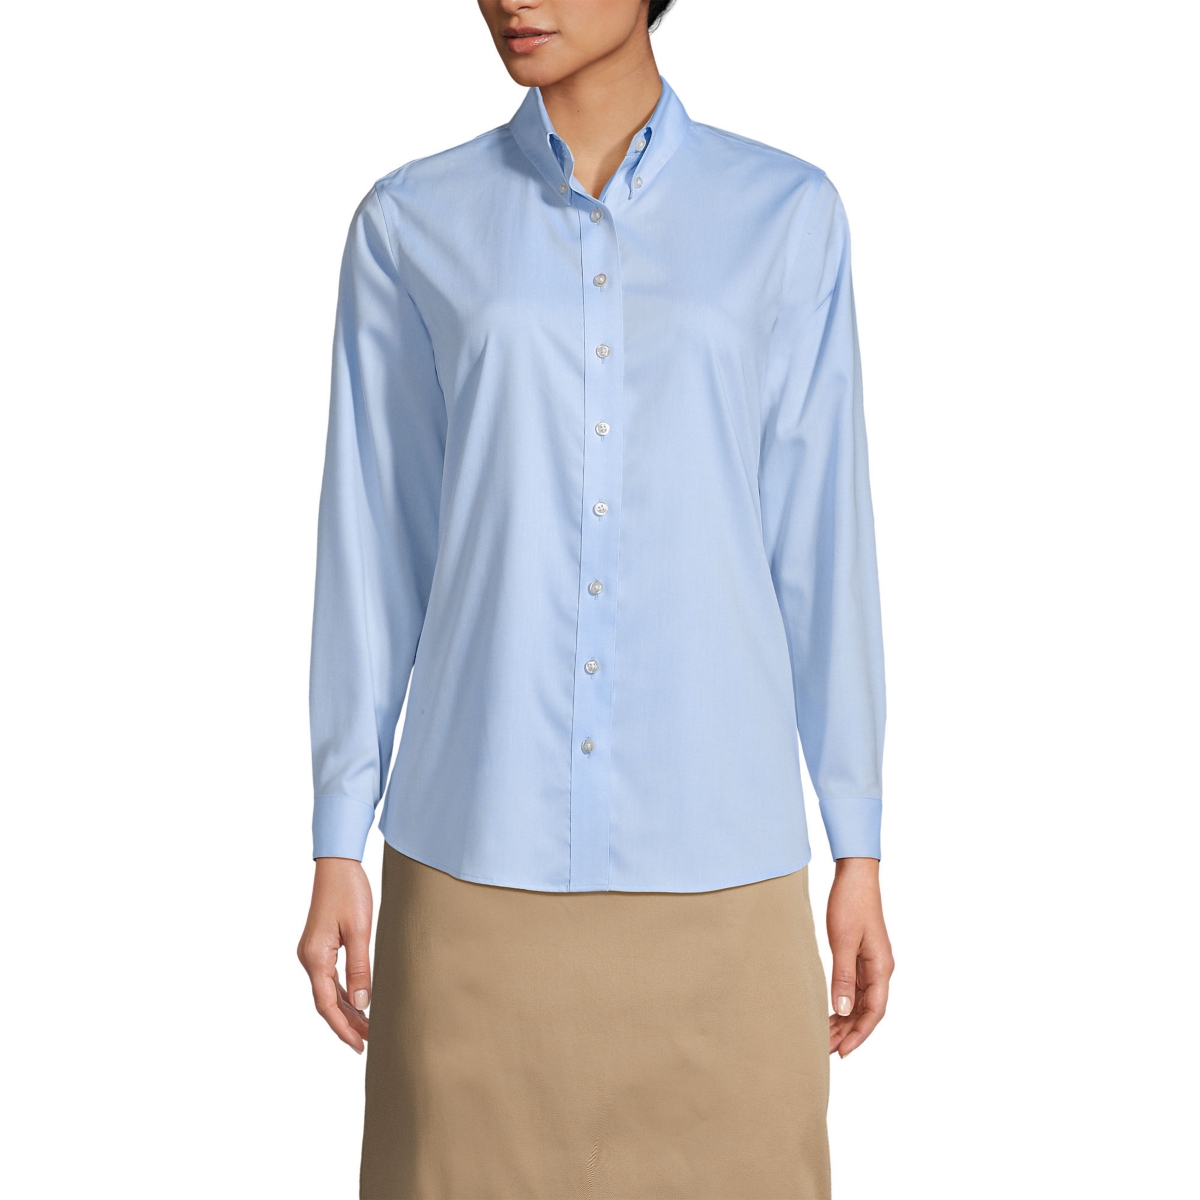 Women's Short Sleeve Feminine Fit Essential T-shirt